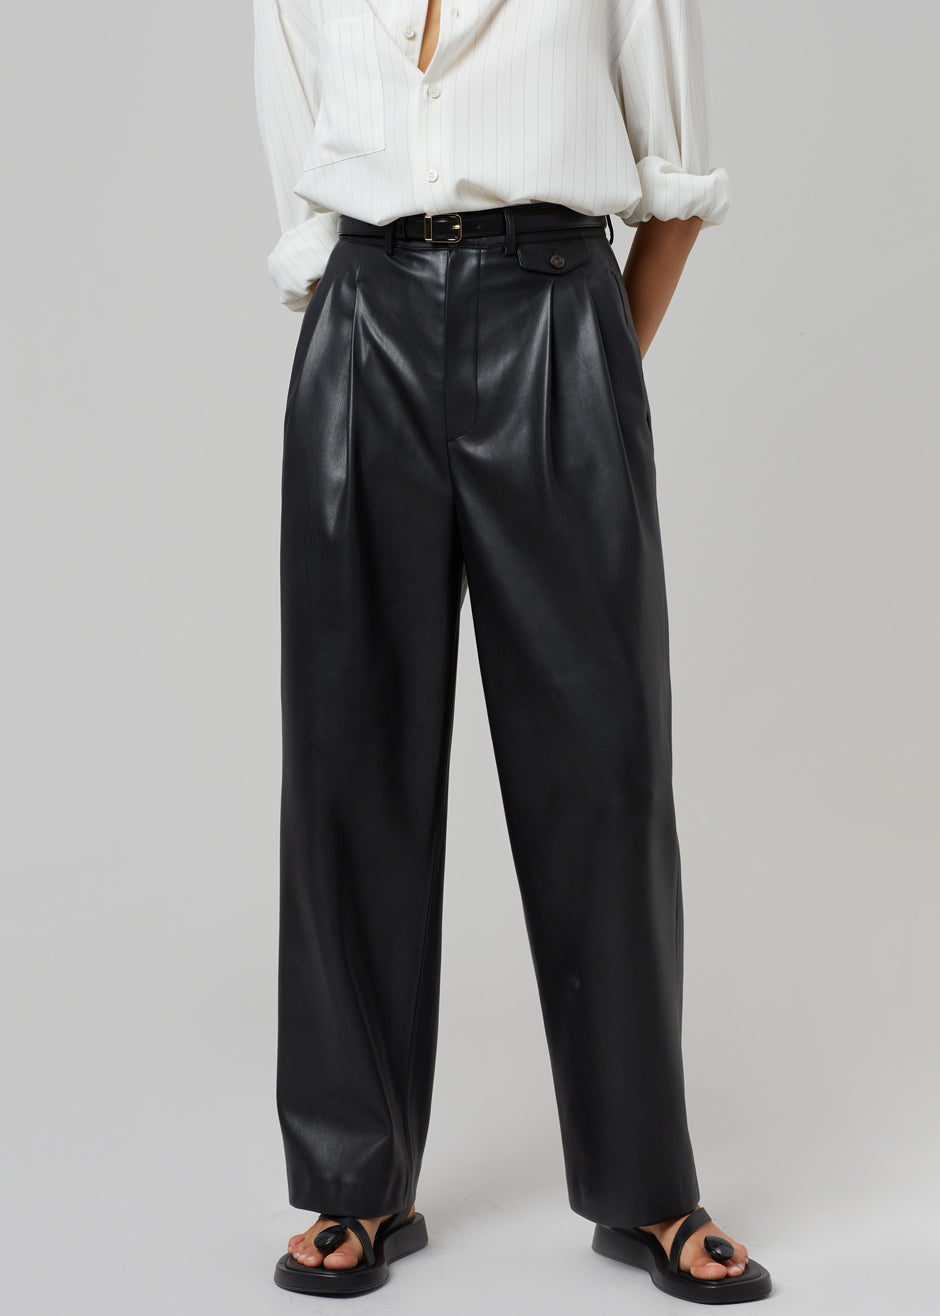 Pernille Faux Leather Pants - Black - 5